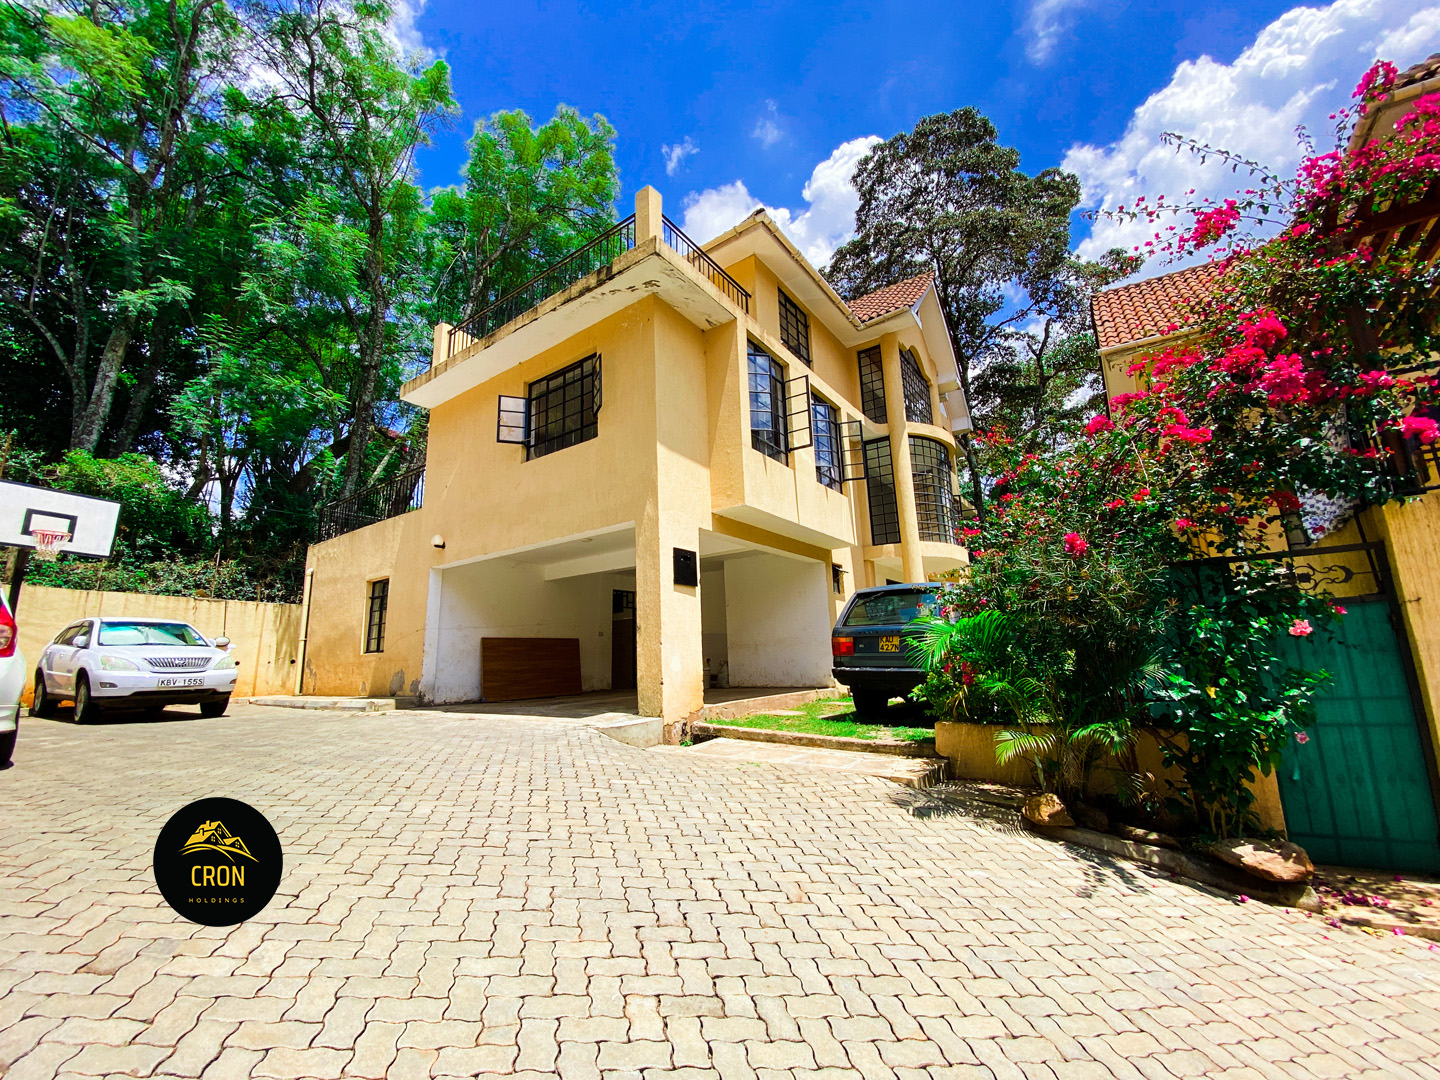 5 Bedroom Townhouse for Rent Kyuna, Nairobi | Cron Holdings